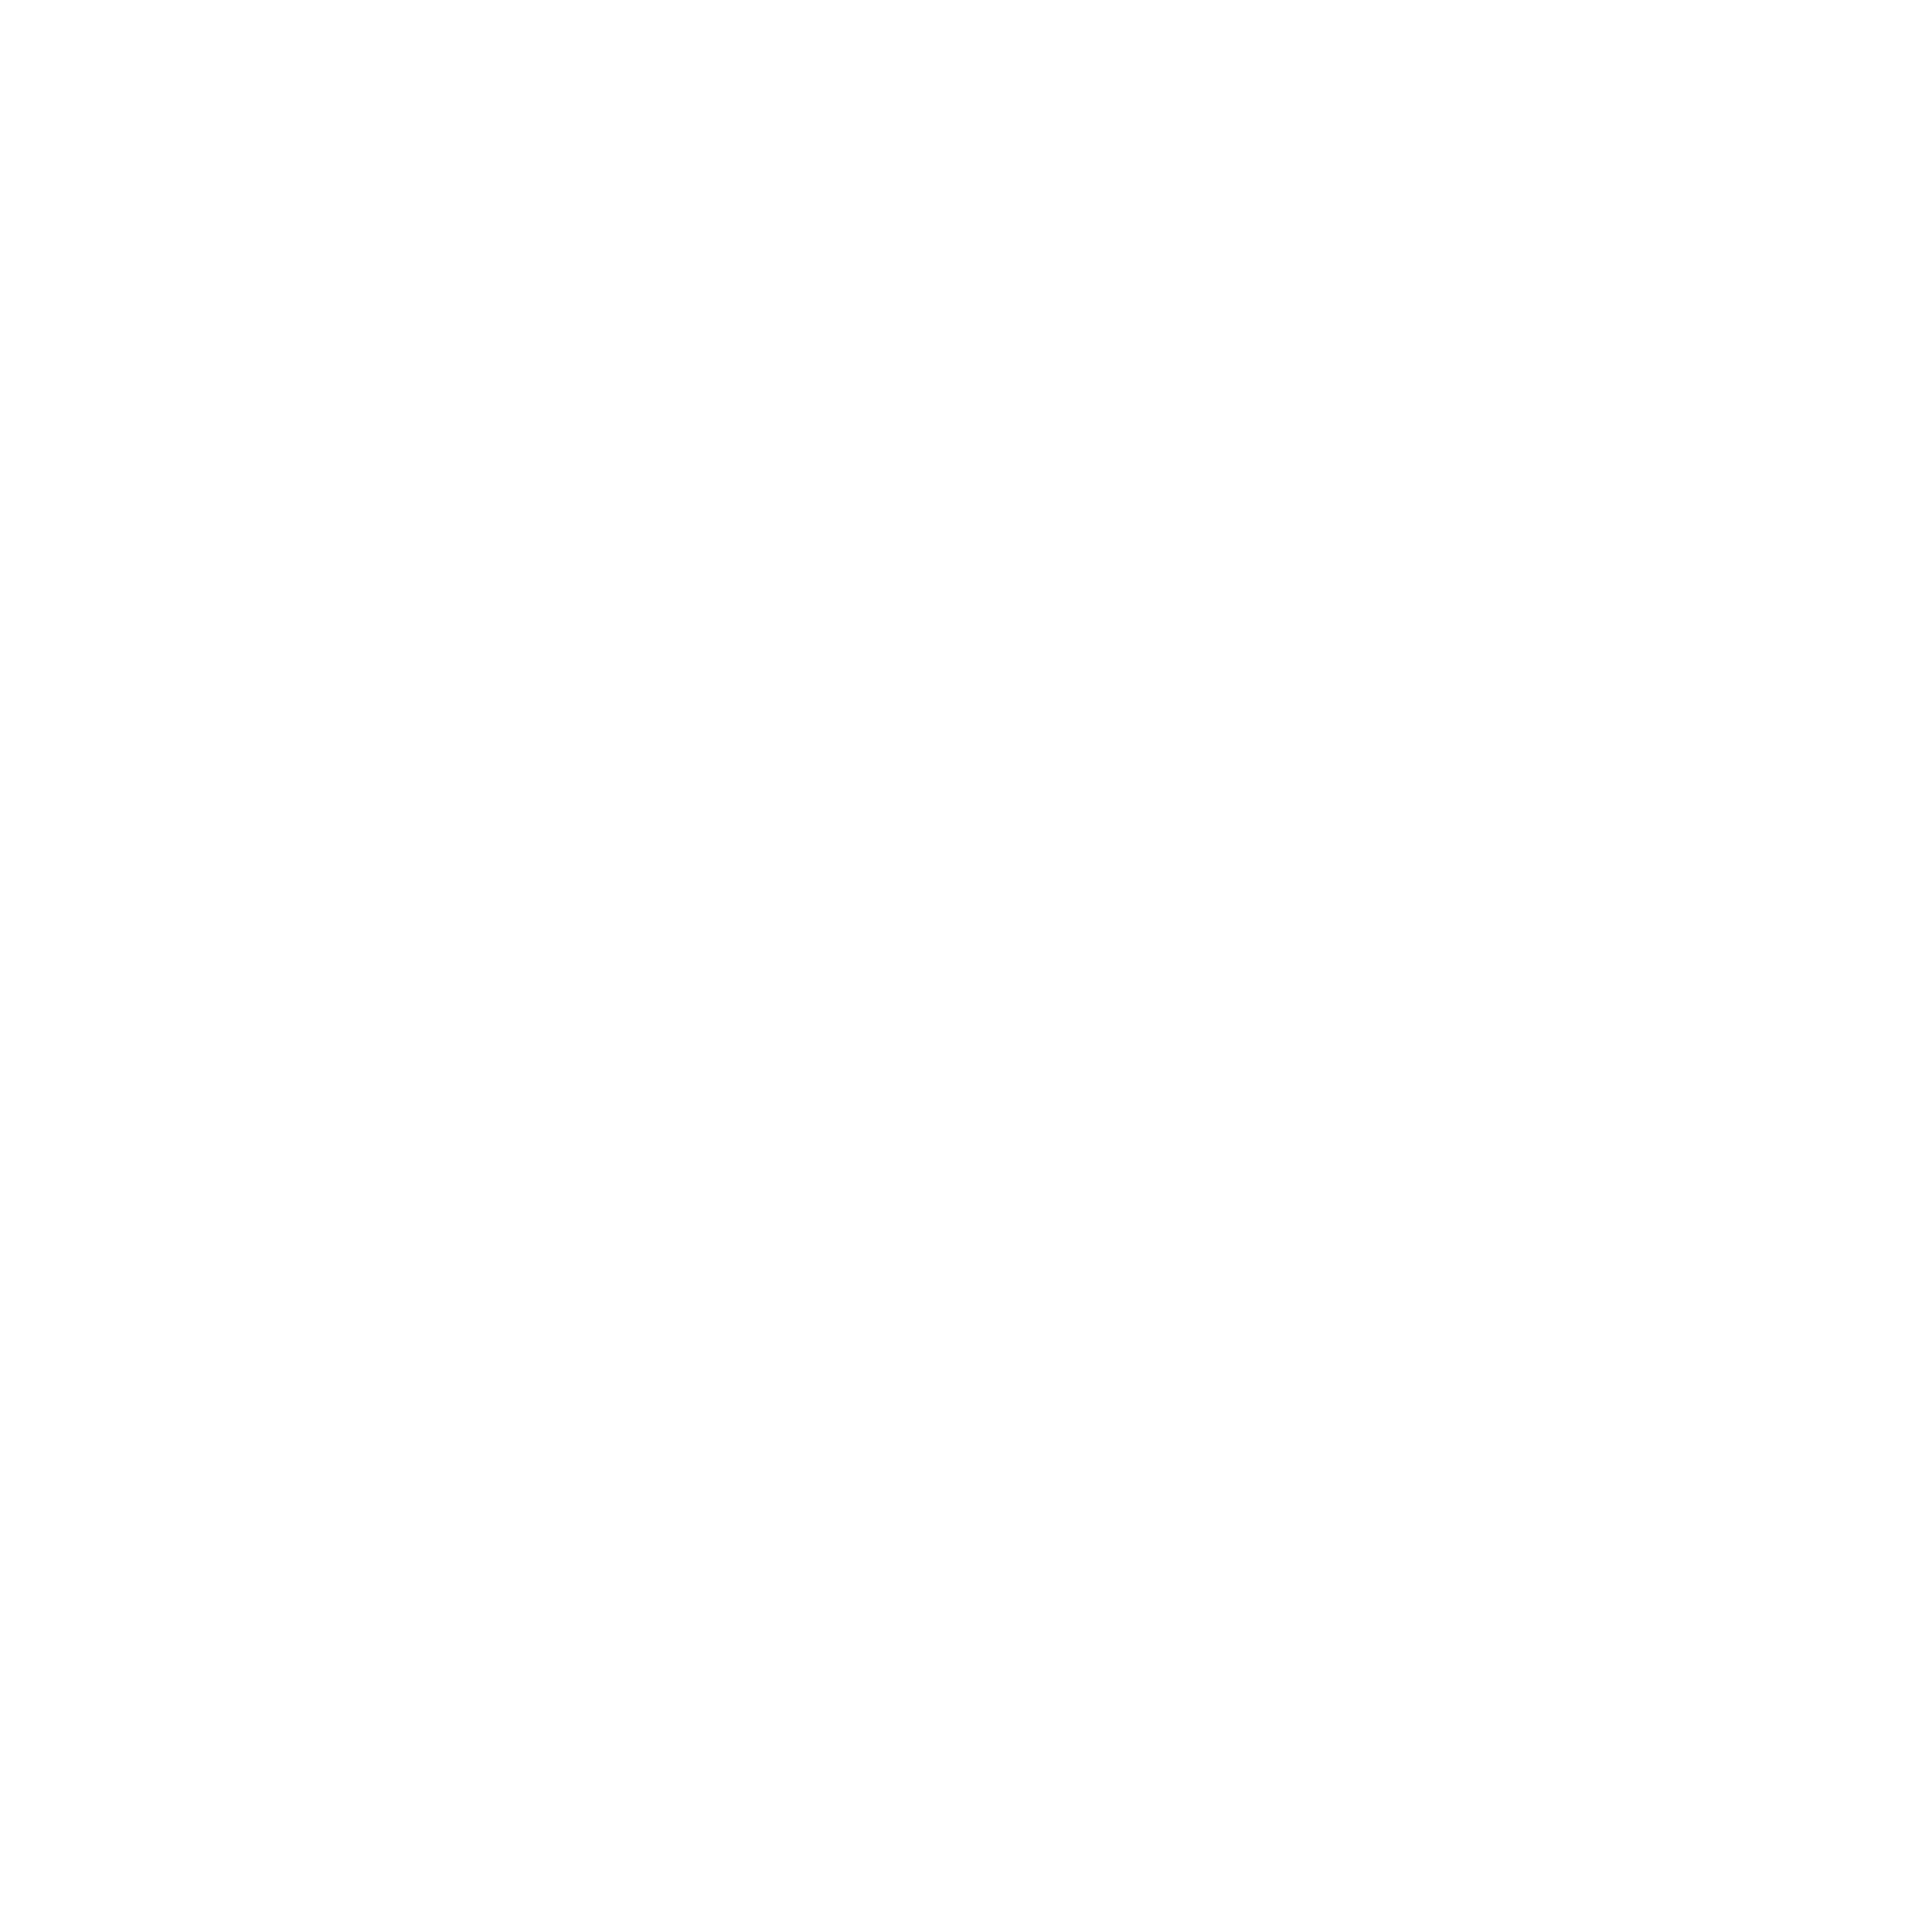 UI Mother